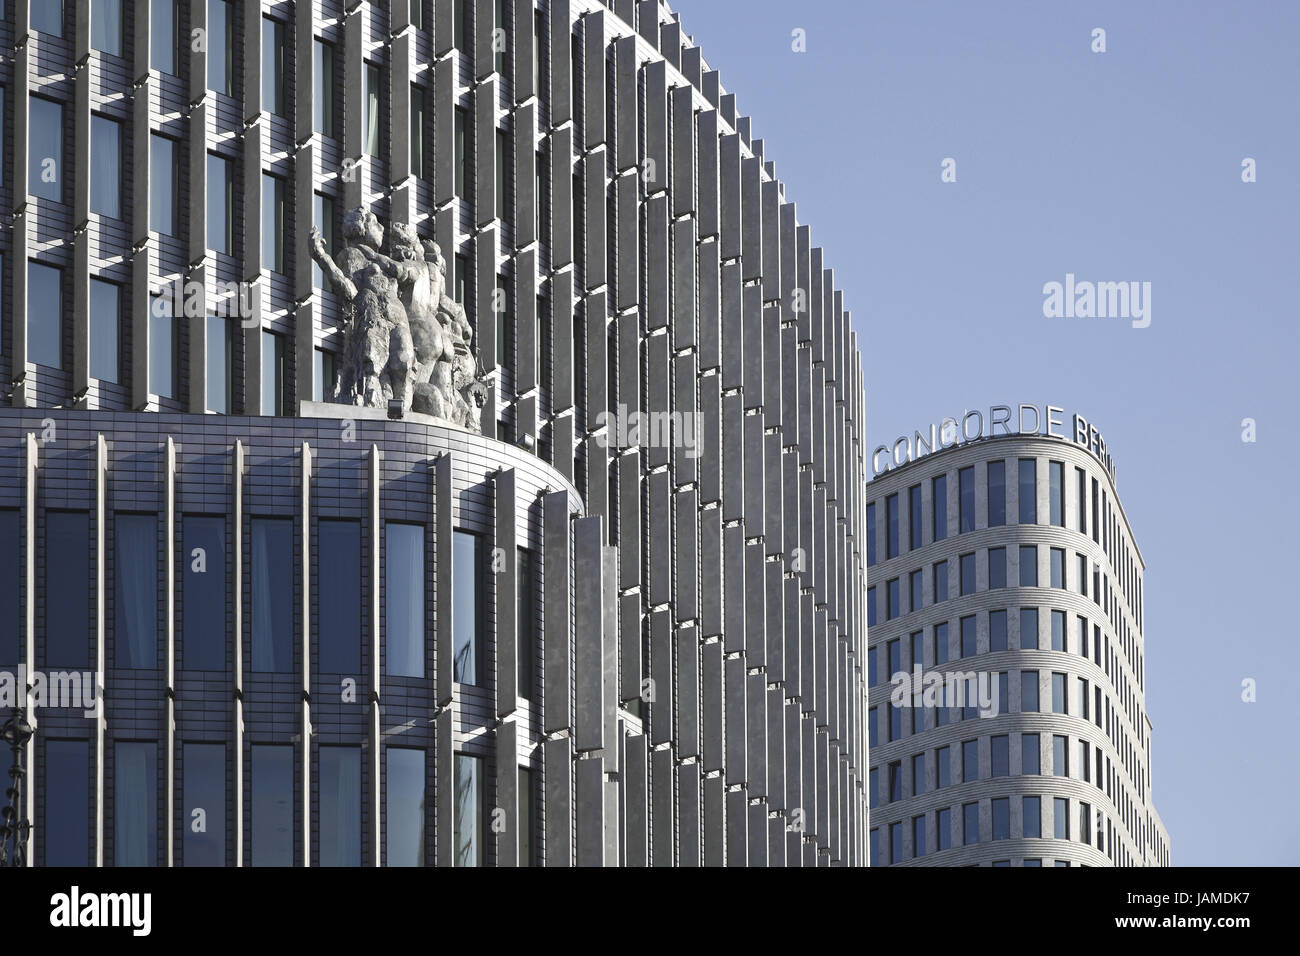 La germania,Berlino,Swissotel,Concorde hotel, Foto Stock